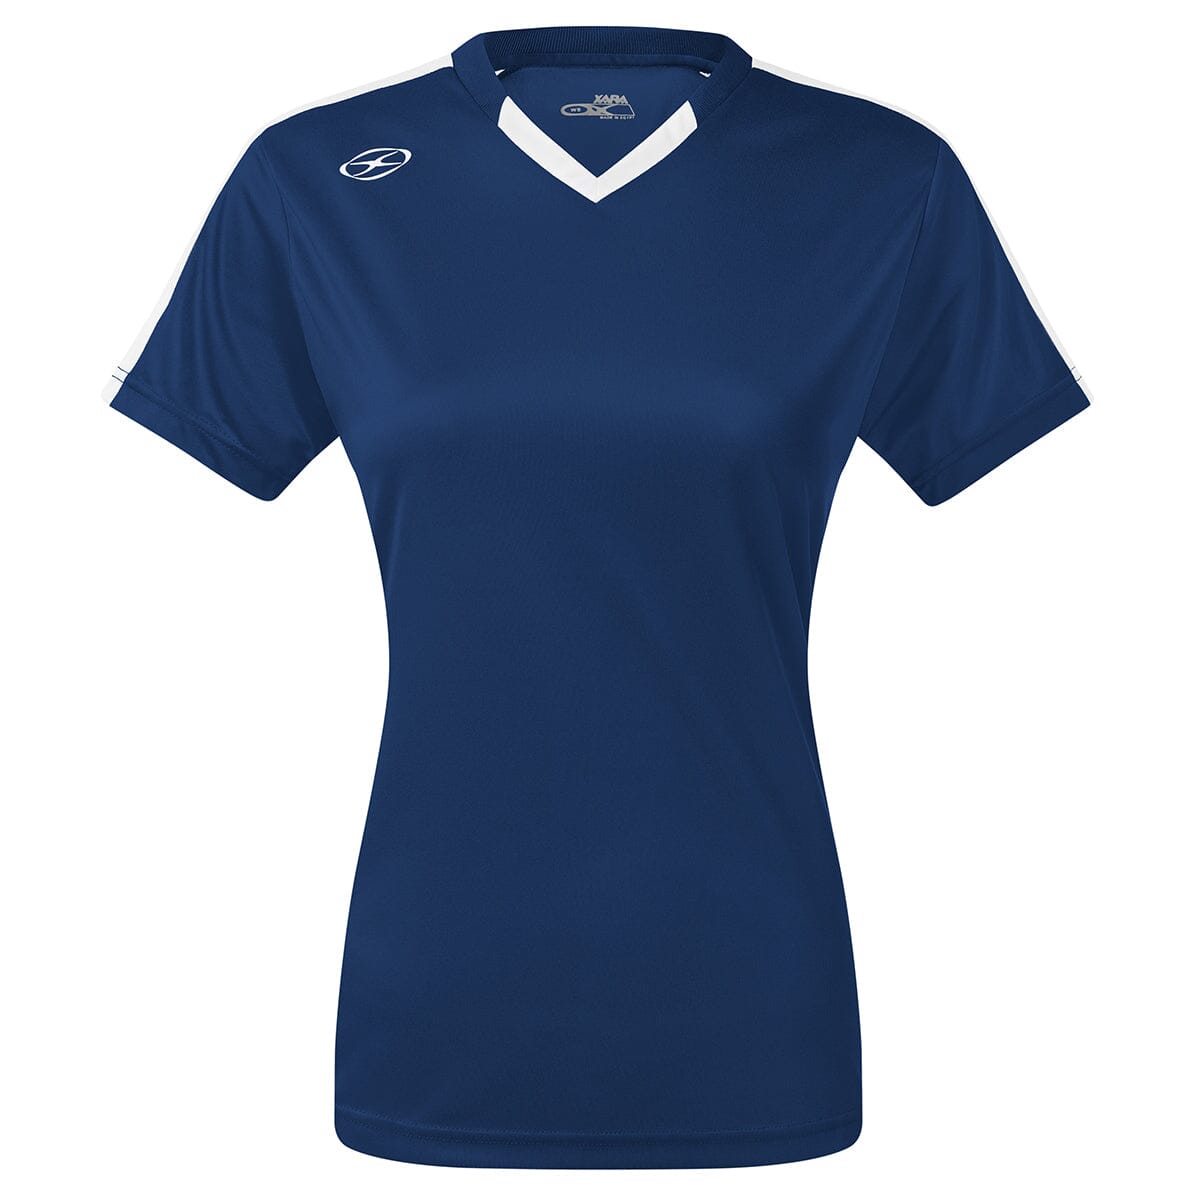 Britannia Jersey - Home Colors - Female Shirt Xara Soccer Navy/White Womens Large 